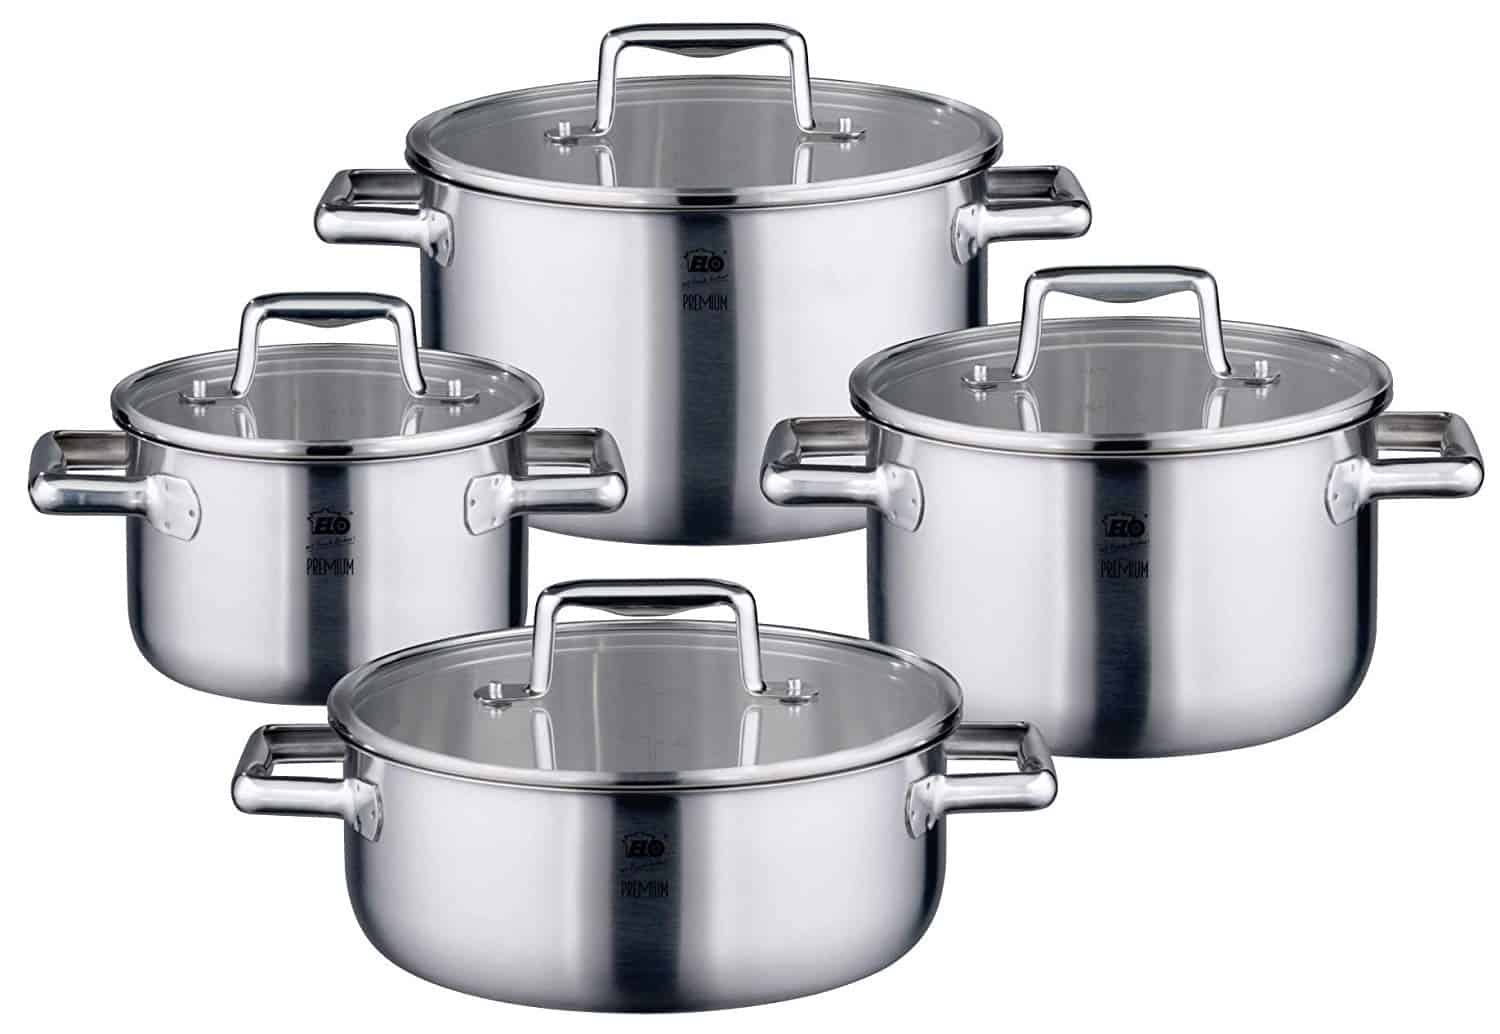 ELO Premium Cookware Pots